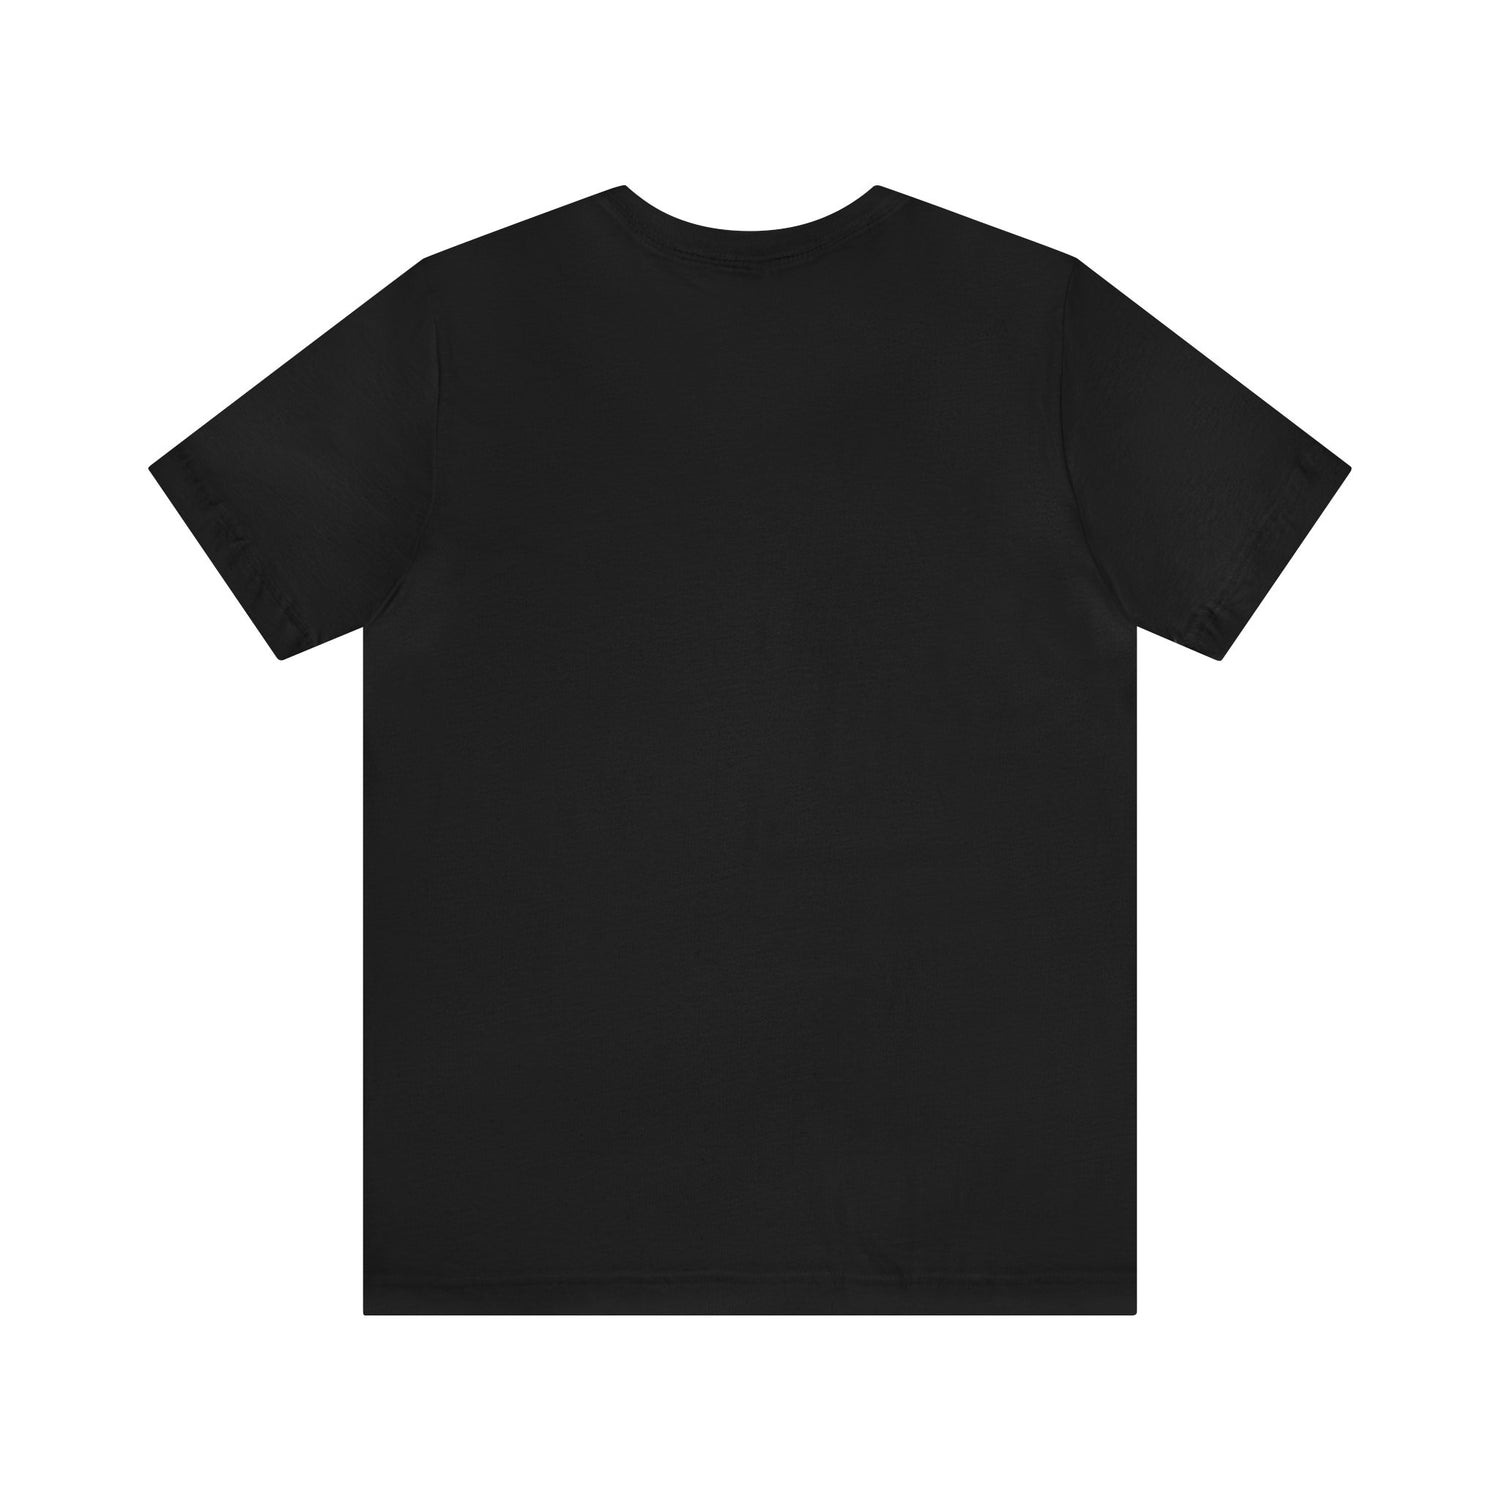 Funny Office Tee | Friday T-Shirt | Office Gift Idea T-Shirt Petrova Designs